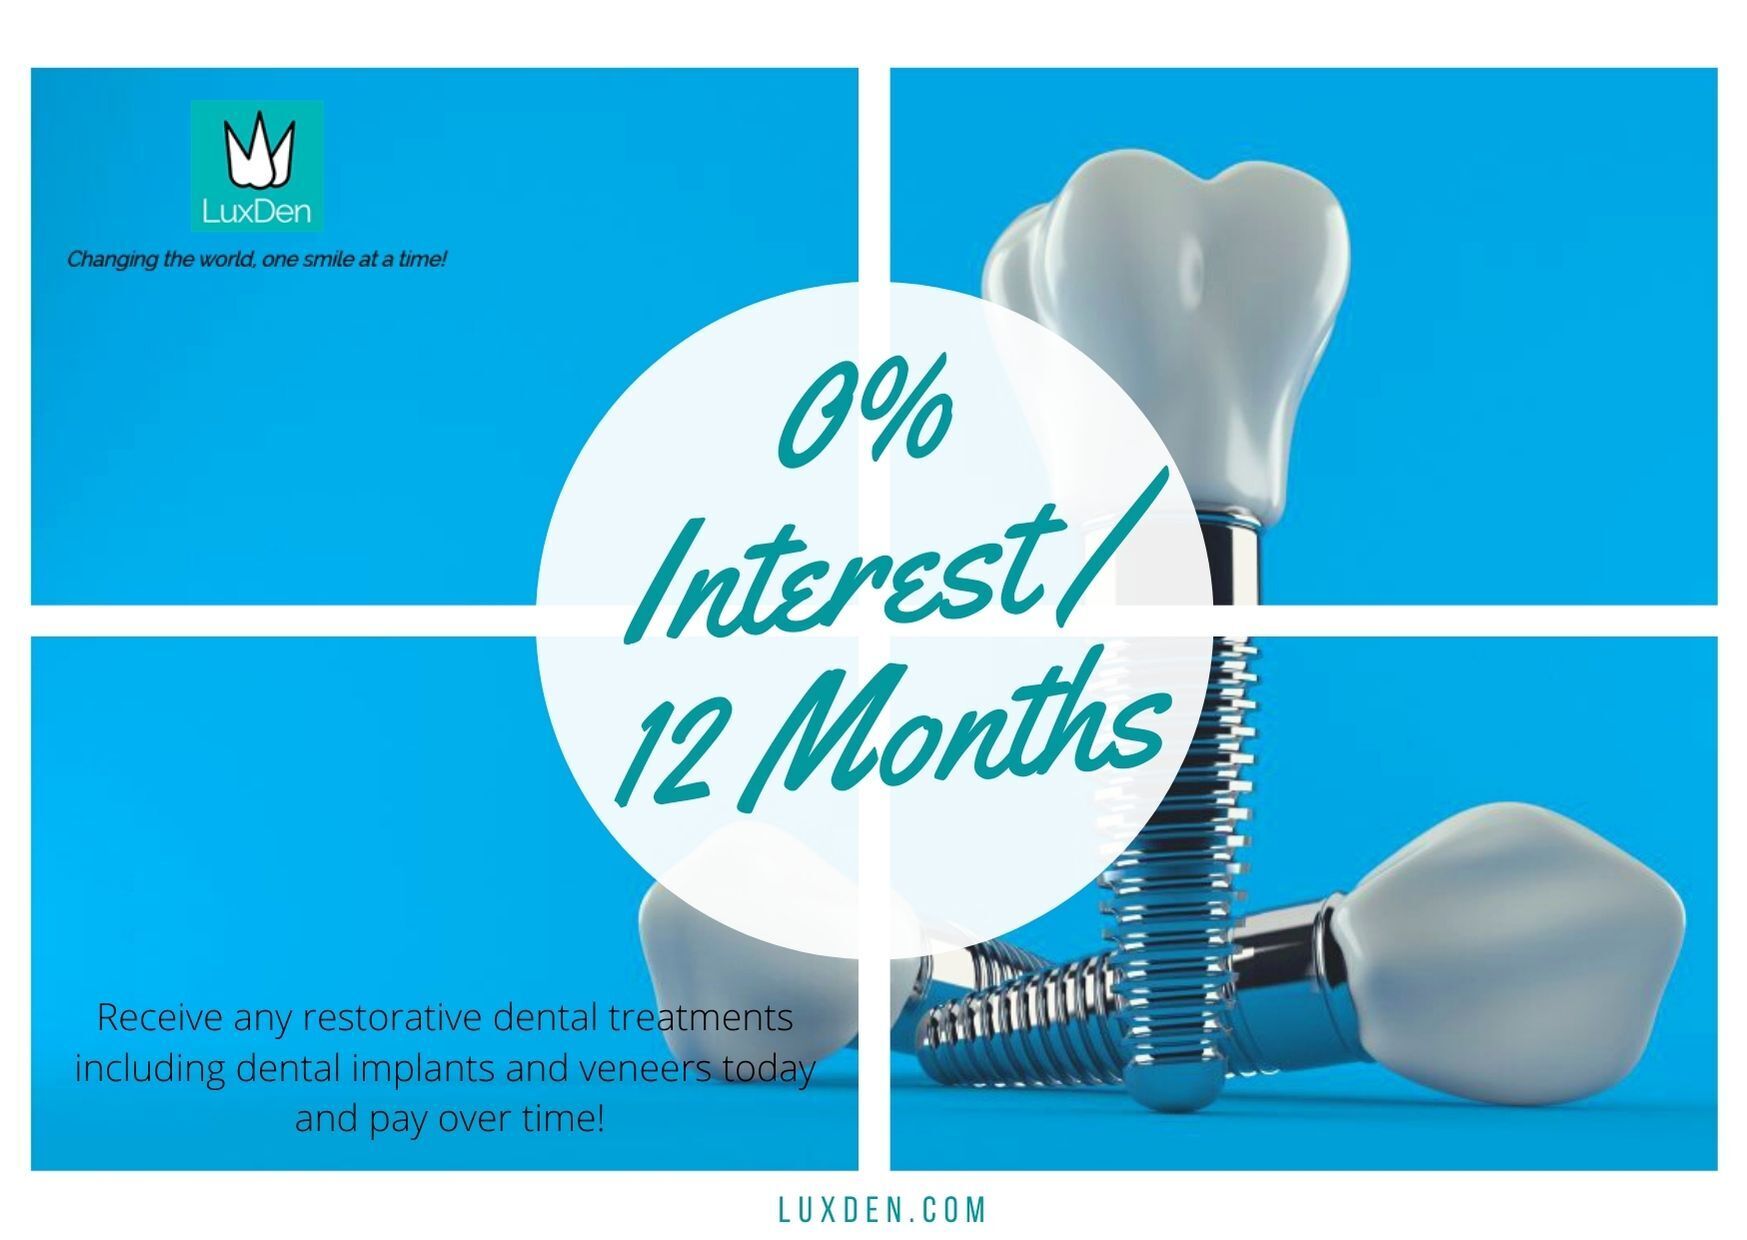 LuxDen Dental Center offers interest-free financing